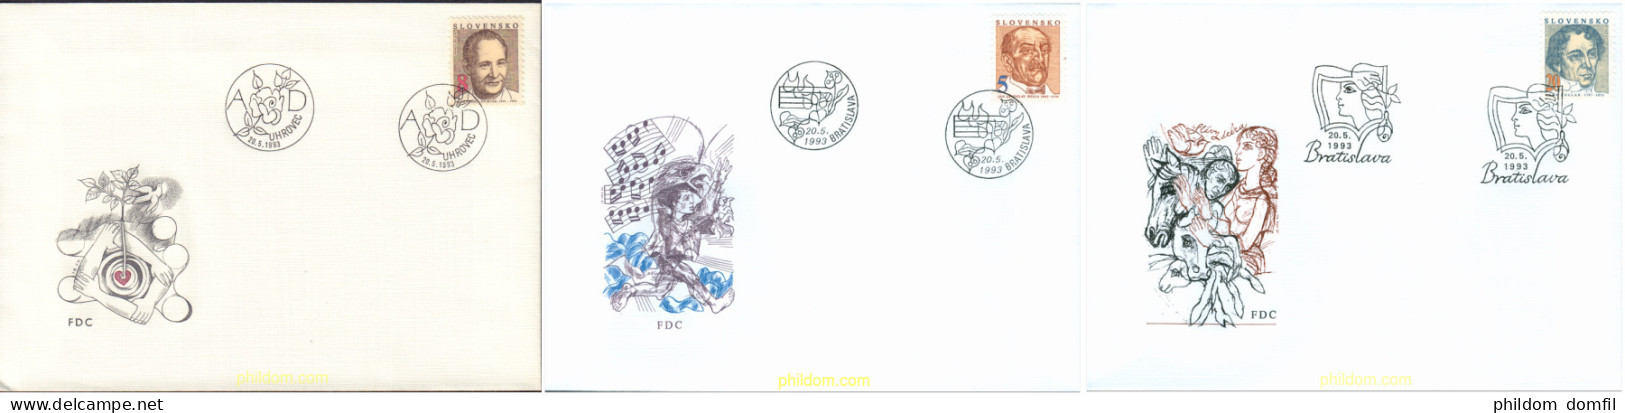 450343 MNH ESLOVAQUIA 1993 PERSONALIDADES - Unused Stamps